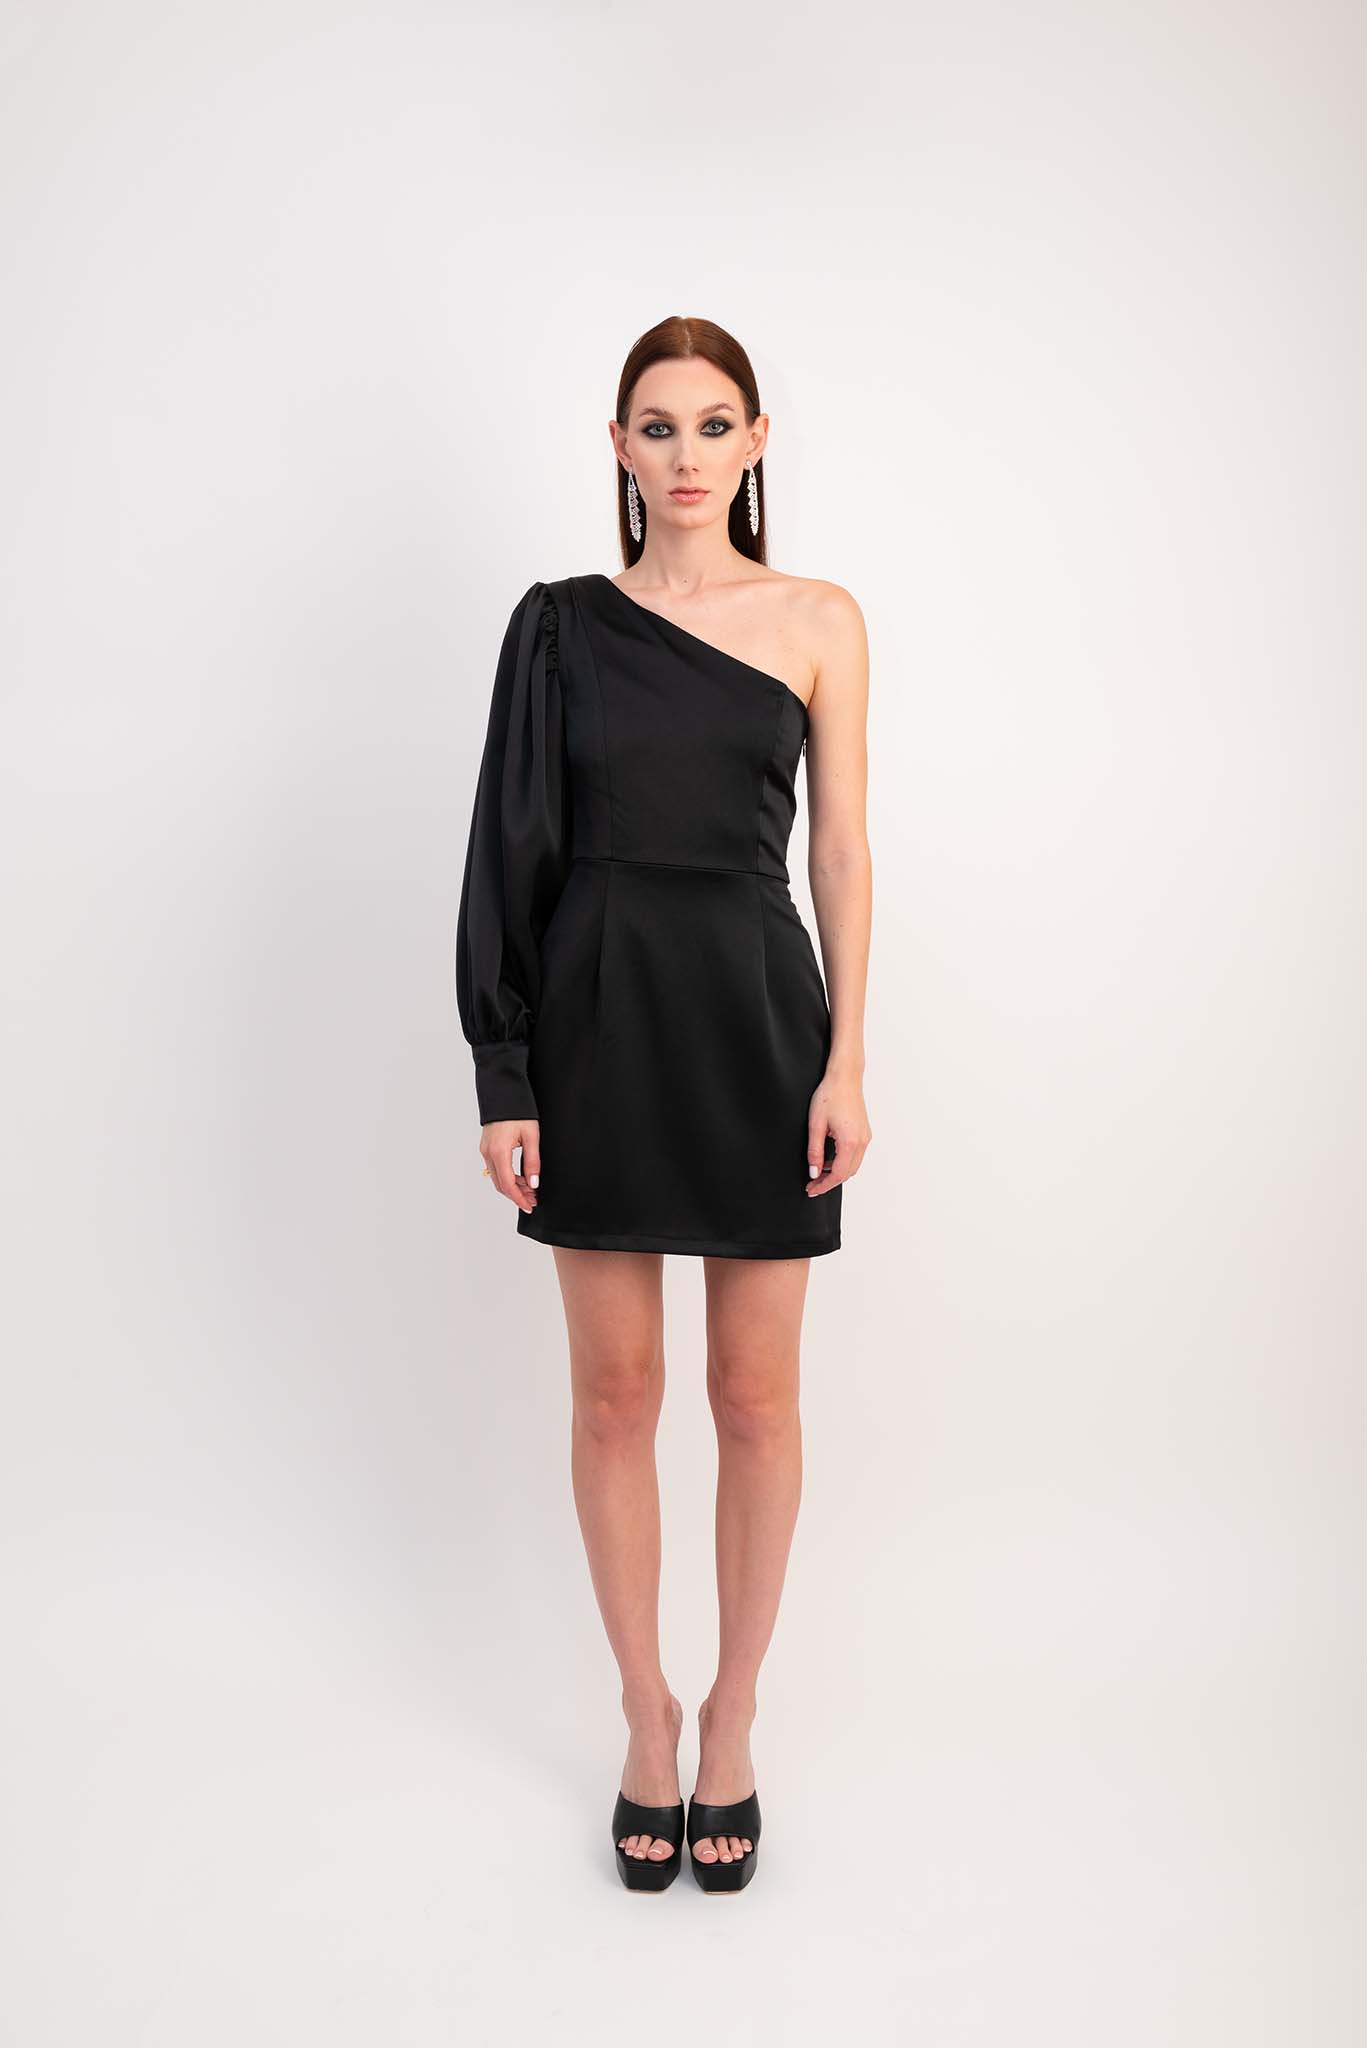 IRA by Irini Charalampous, @irathebrand online shop fashionable ready-to-wear womenswear brand satin dress AMARIS color black high heels Cyprus Greece